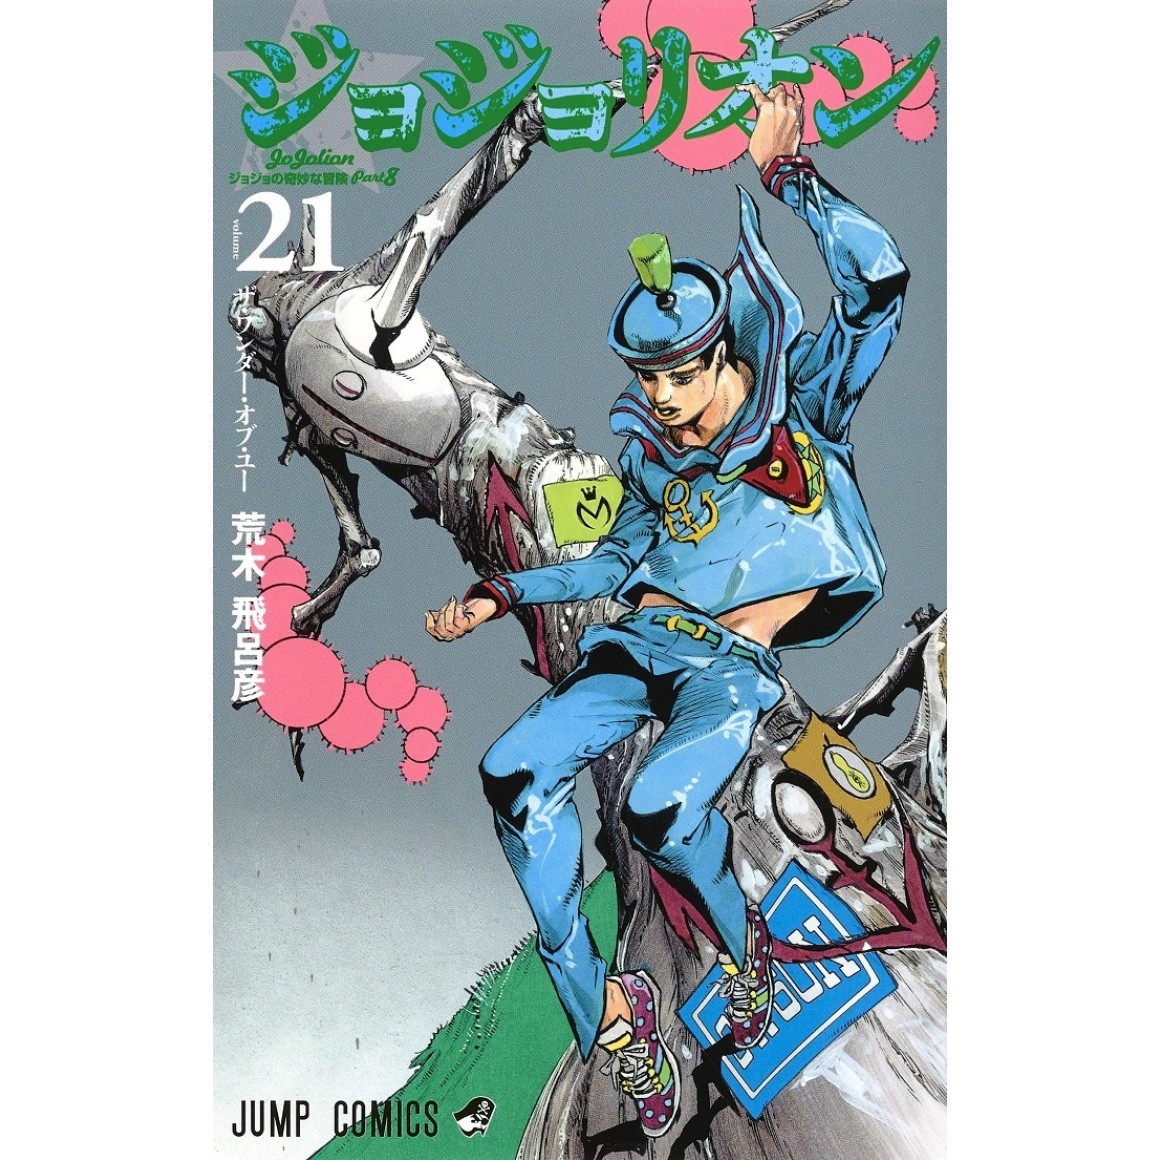 JoJo's Bizarre Adventure, Vol. 16 by Hirohiko Araki